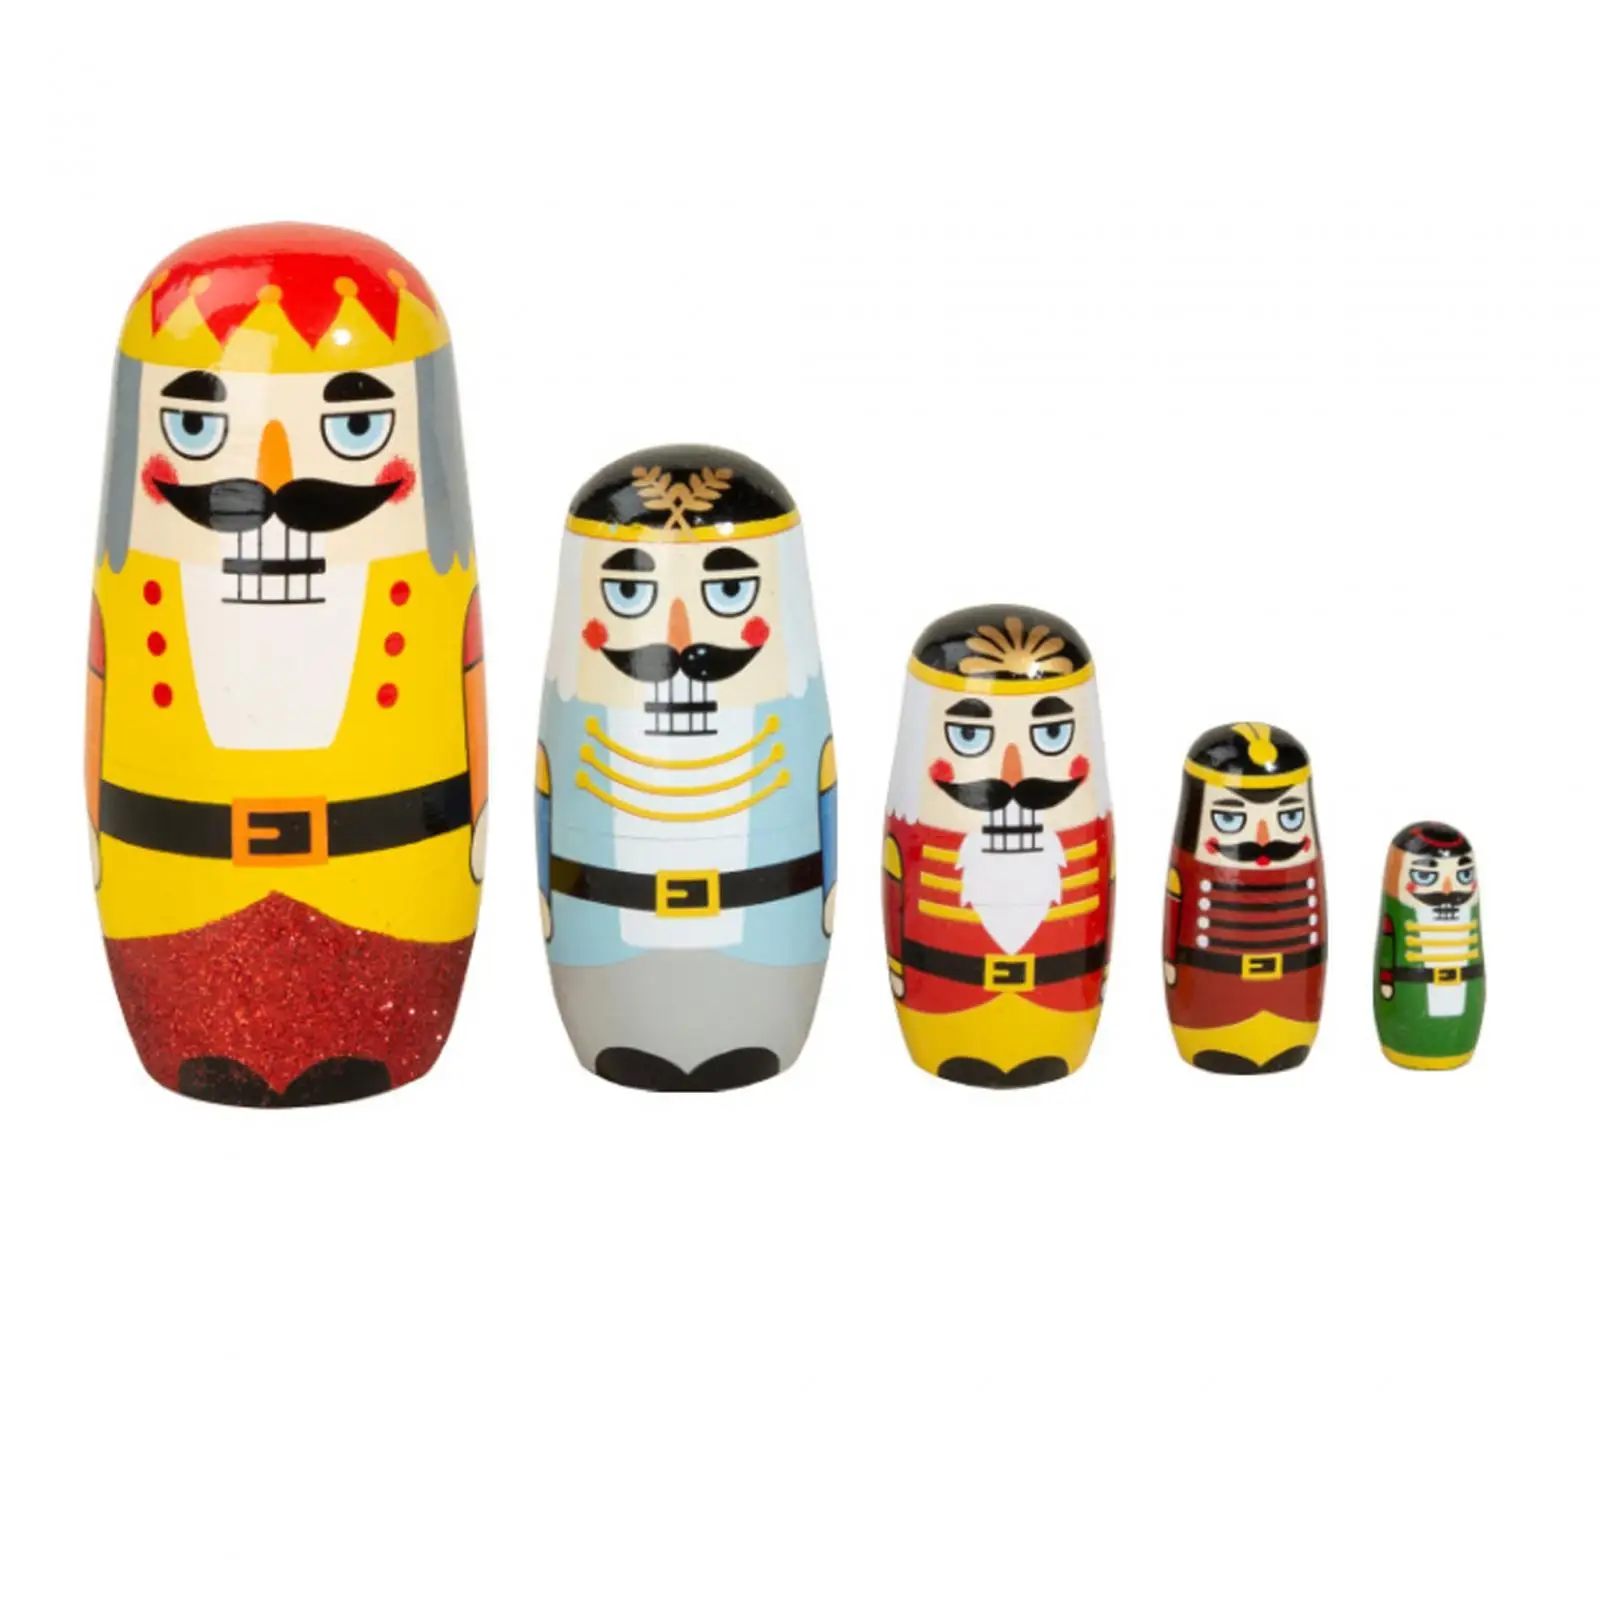 5x Nutcracker Handmade Shelf Cute Birthday Gifts Russian Nesting Dolls Decor